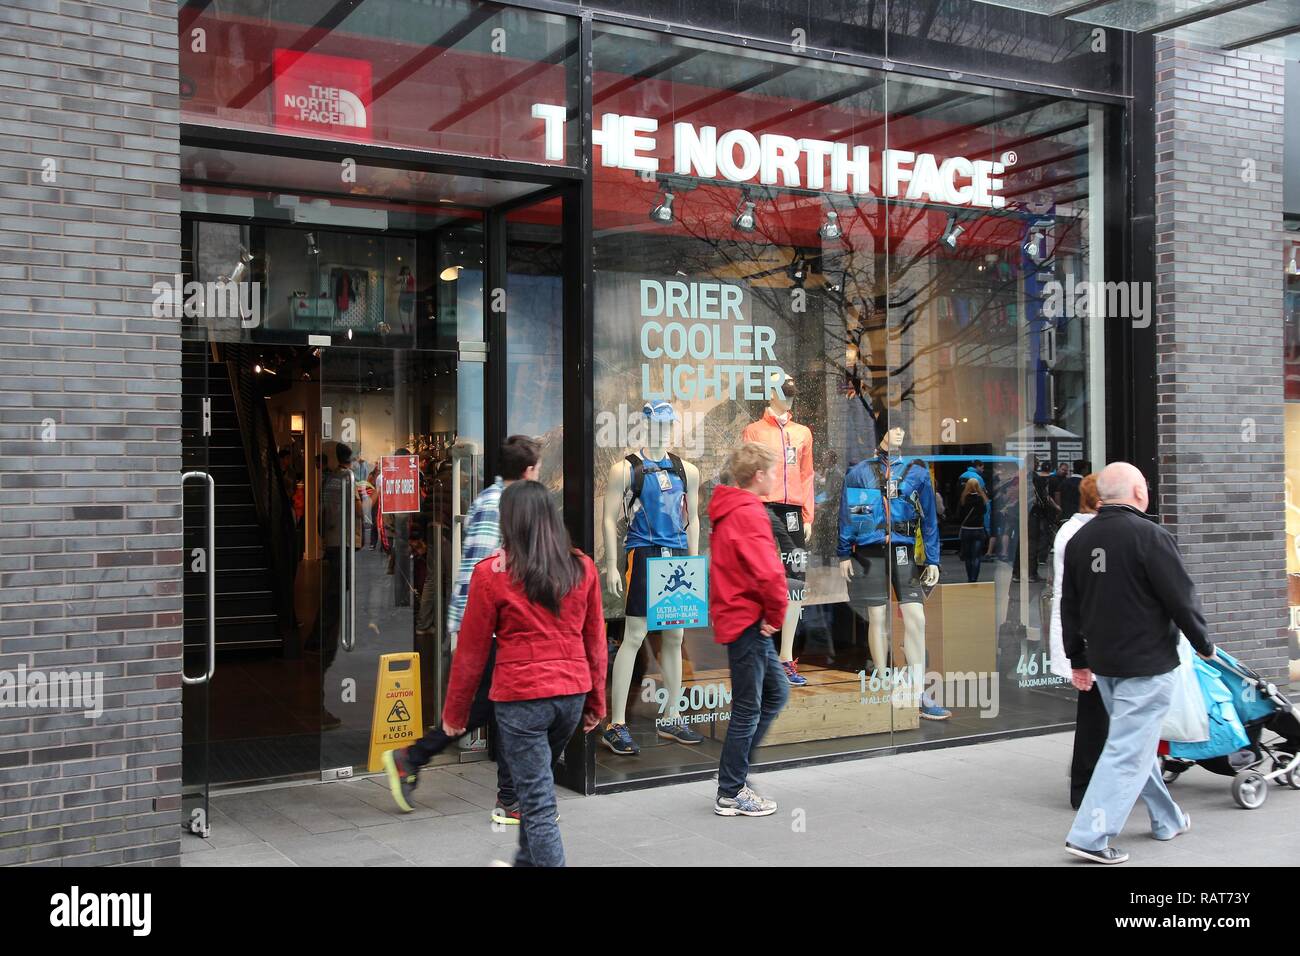 The north face store -Fotos und -Bildmaterial in hoher Auflösung – Alamy